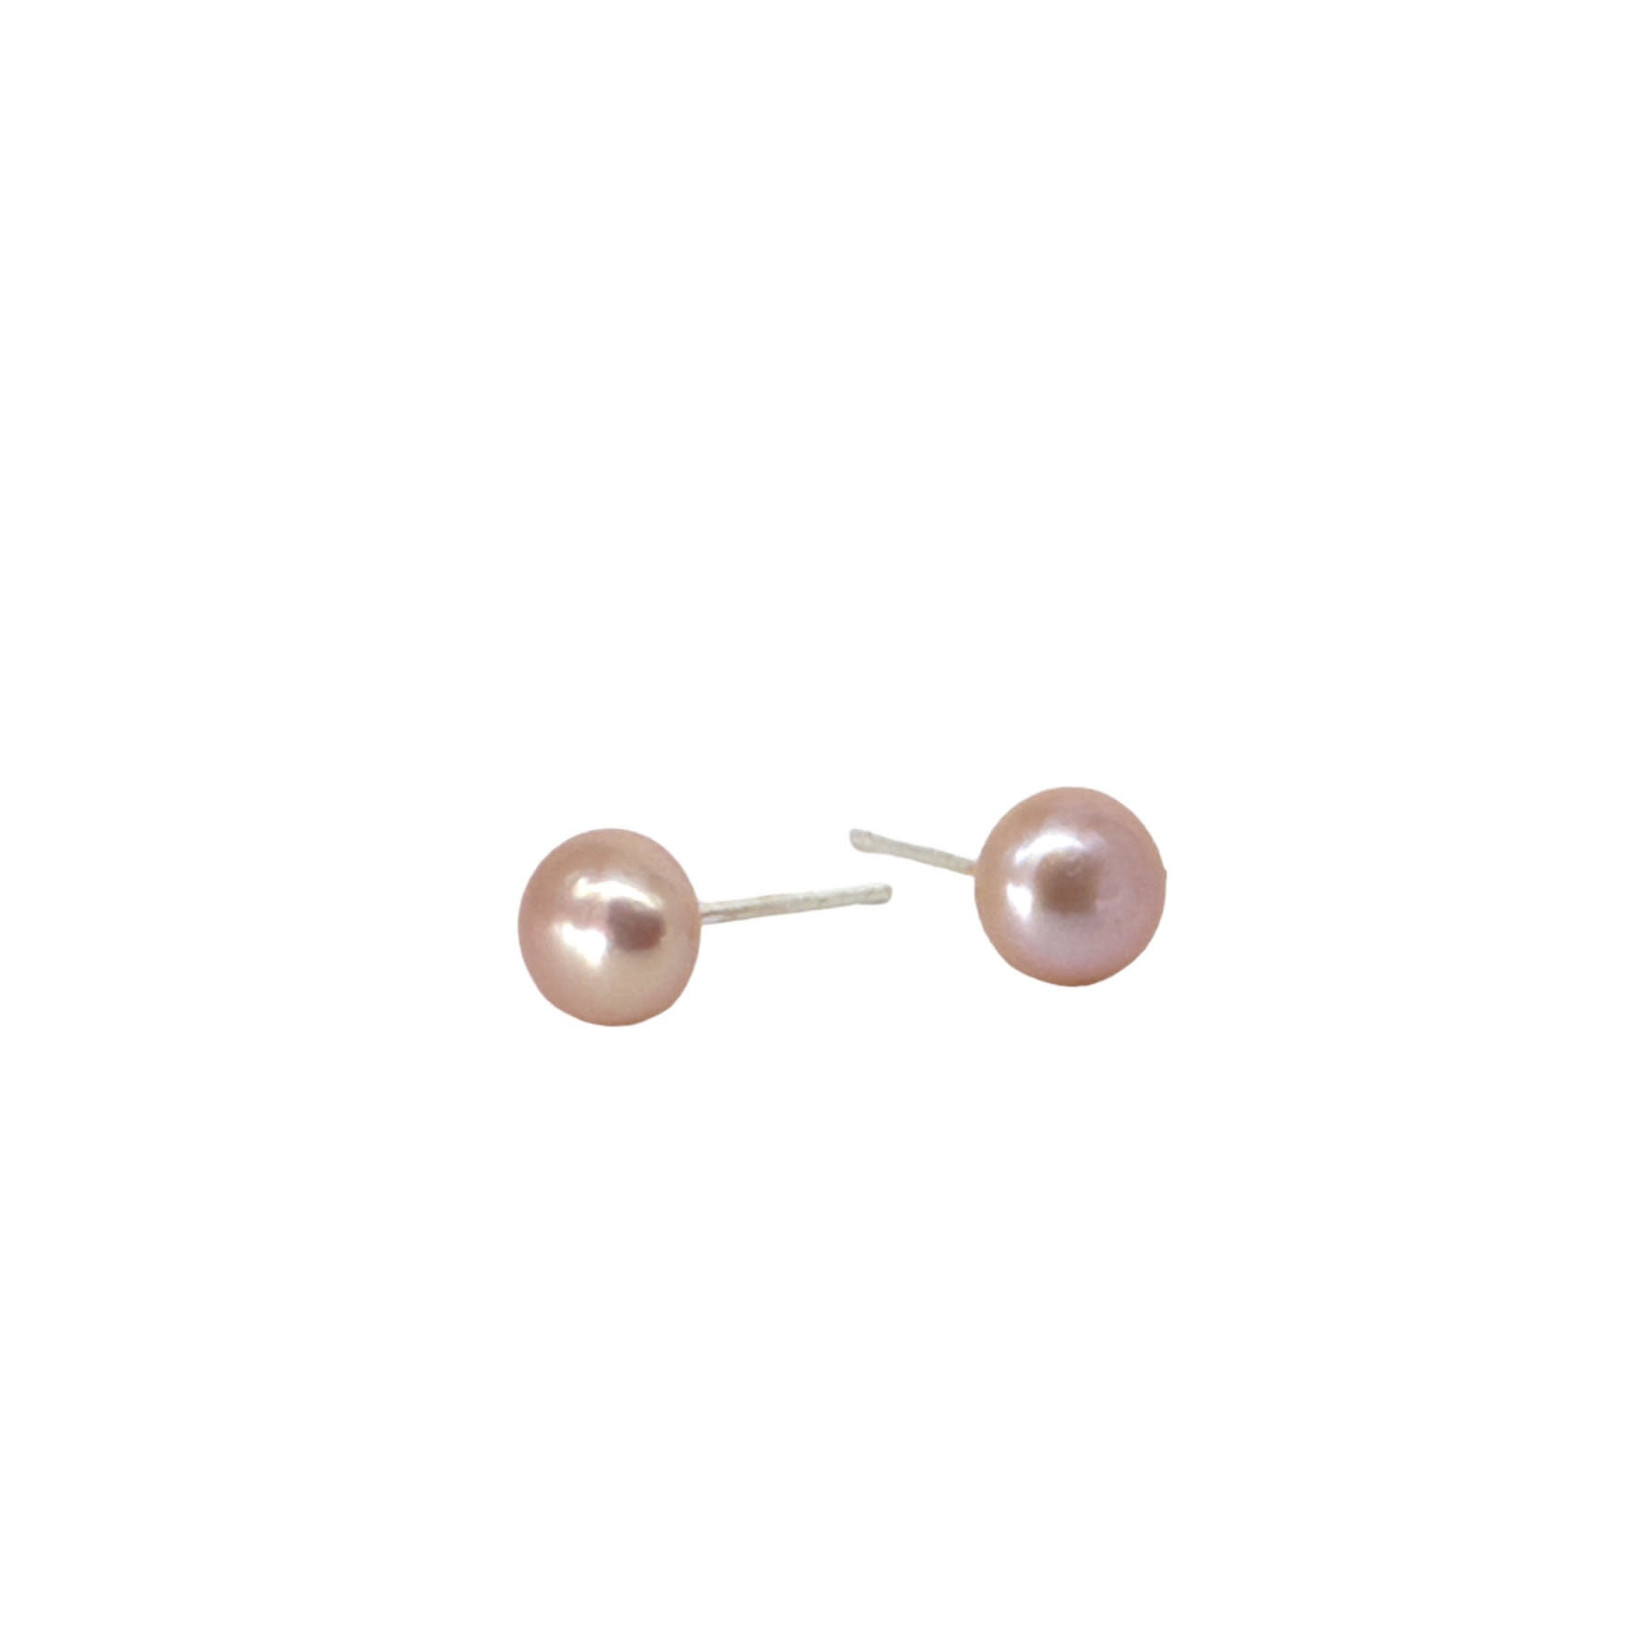 SE520 6mm S/S Pearl Stud Earrings Pink